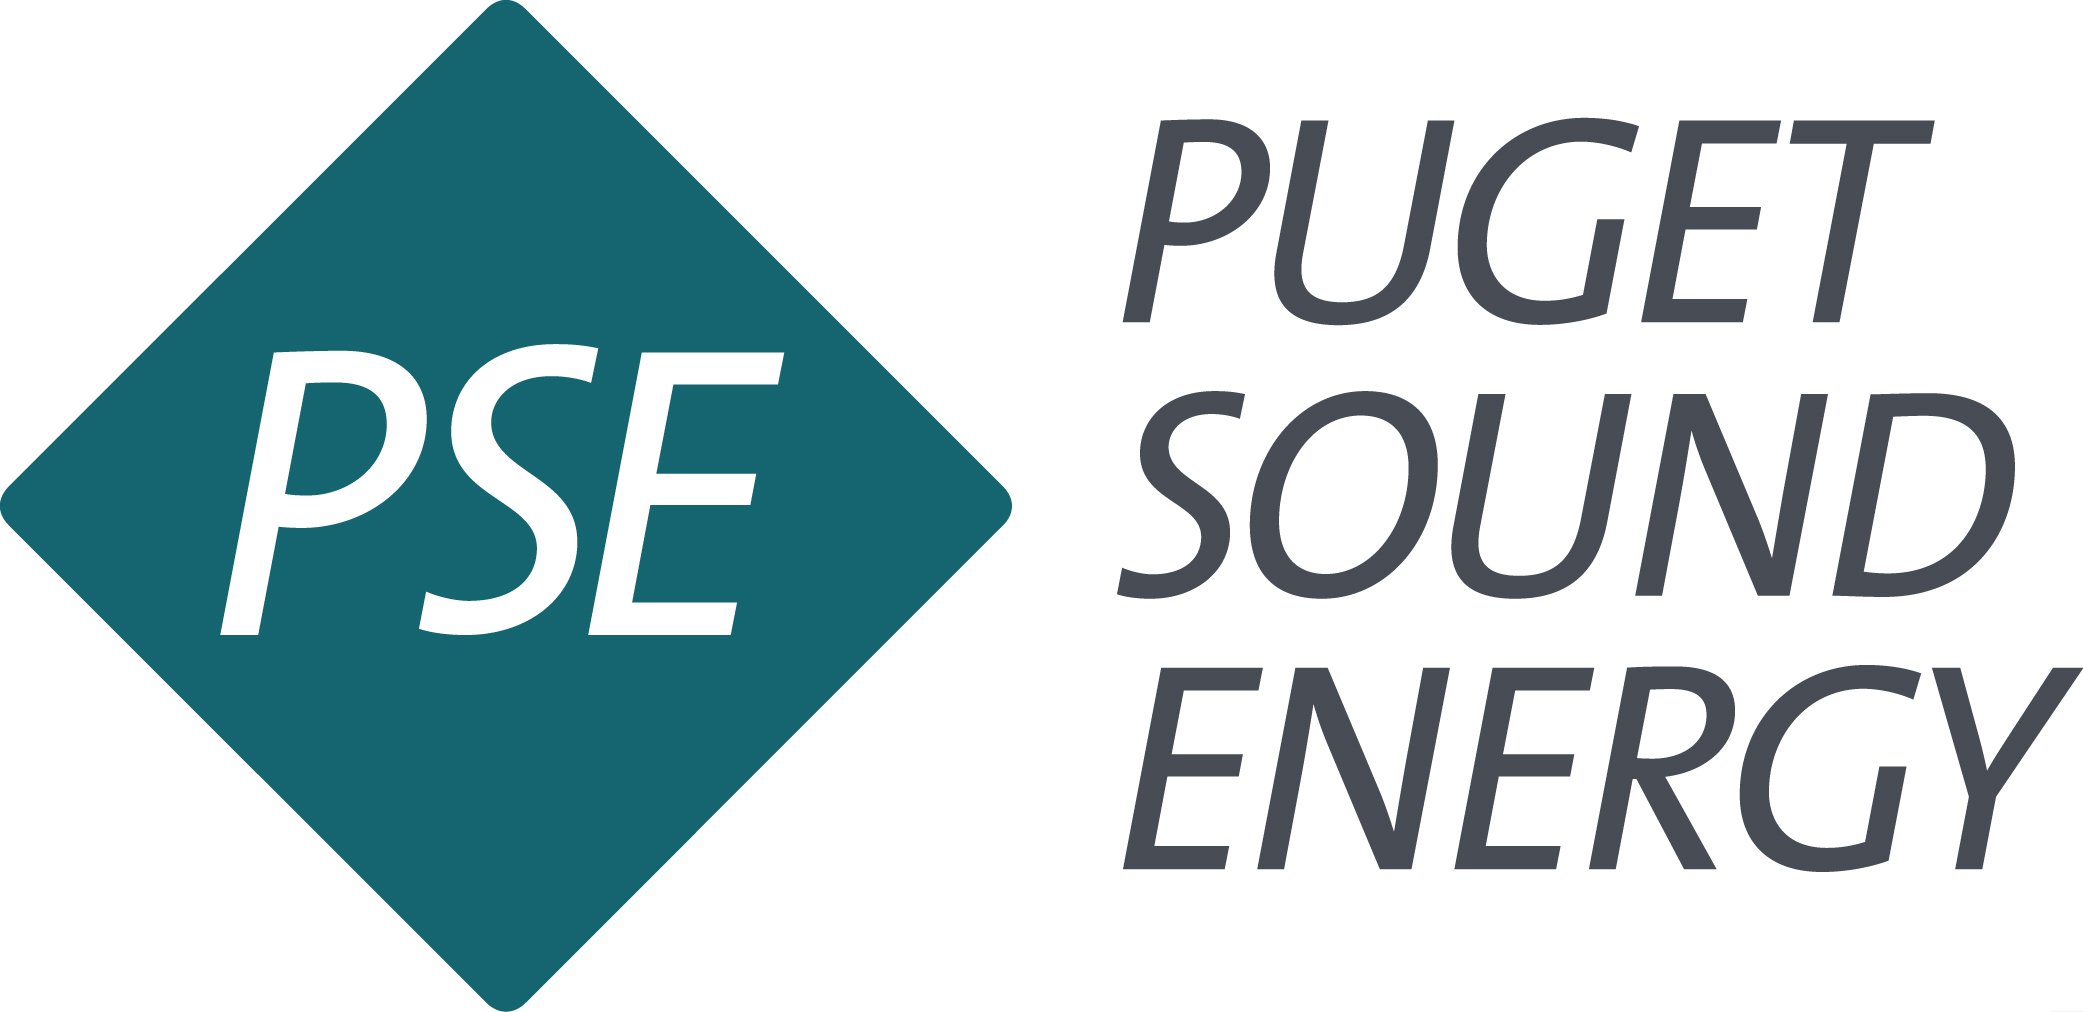 Логотип Puget Sound Energy